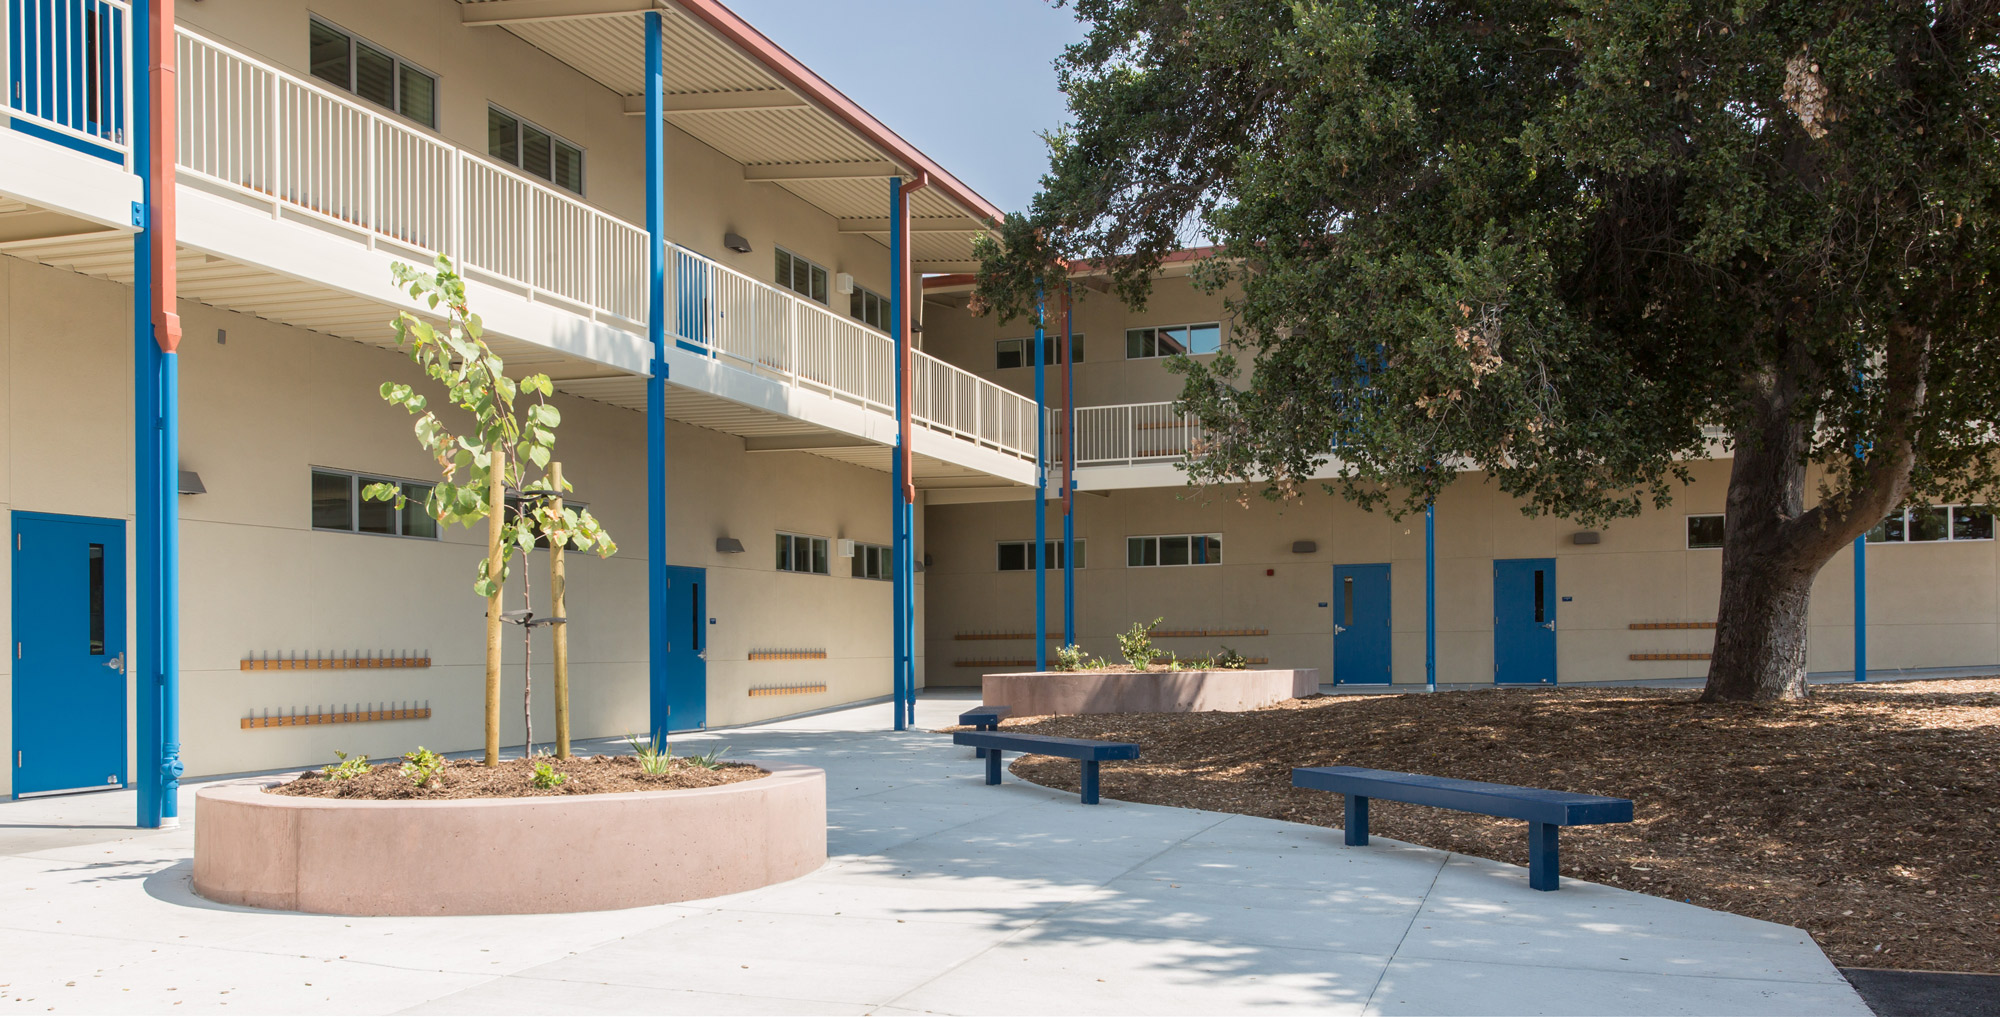 Warm Springs Elementary School Courtyard